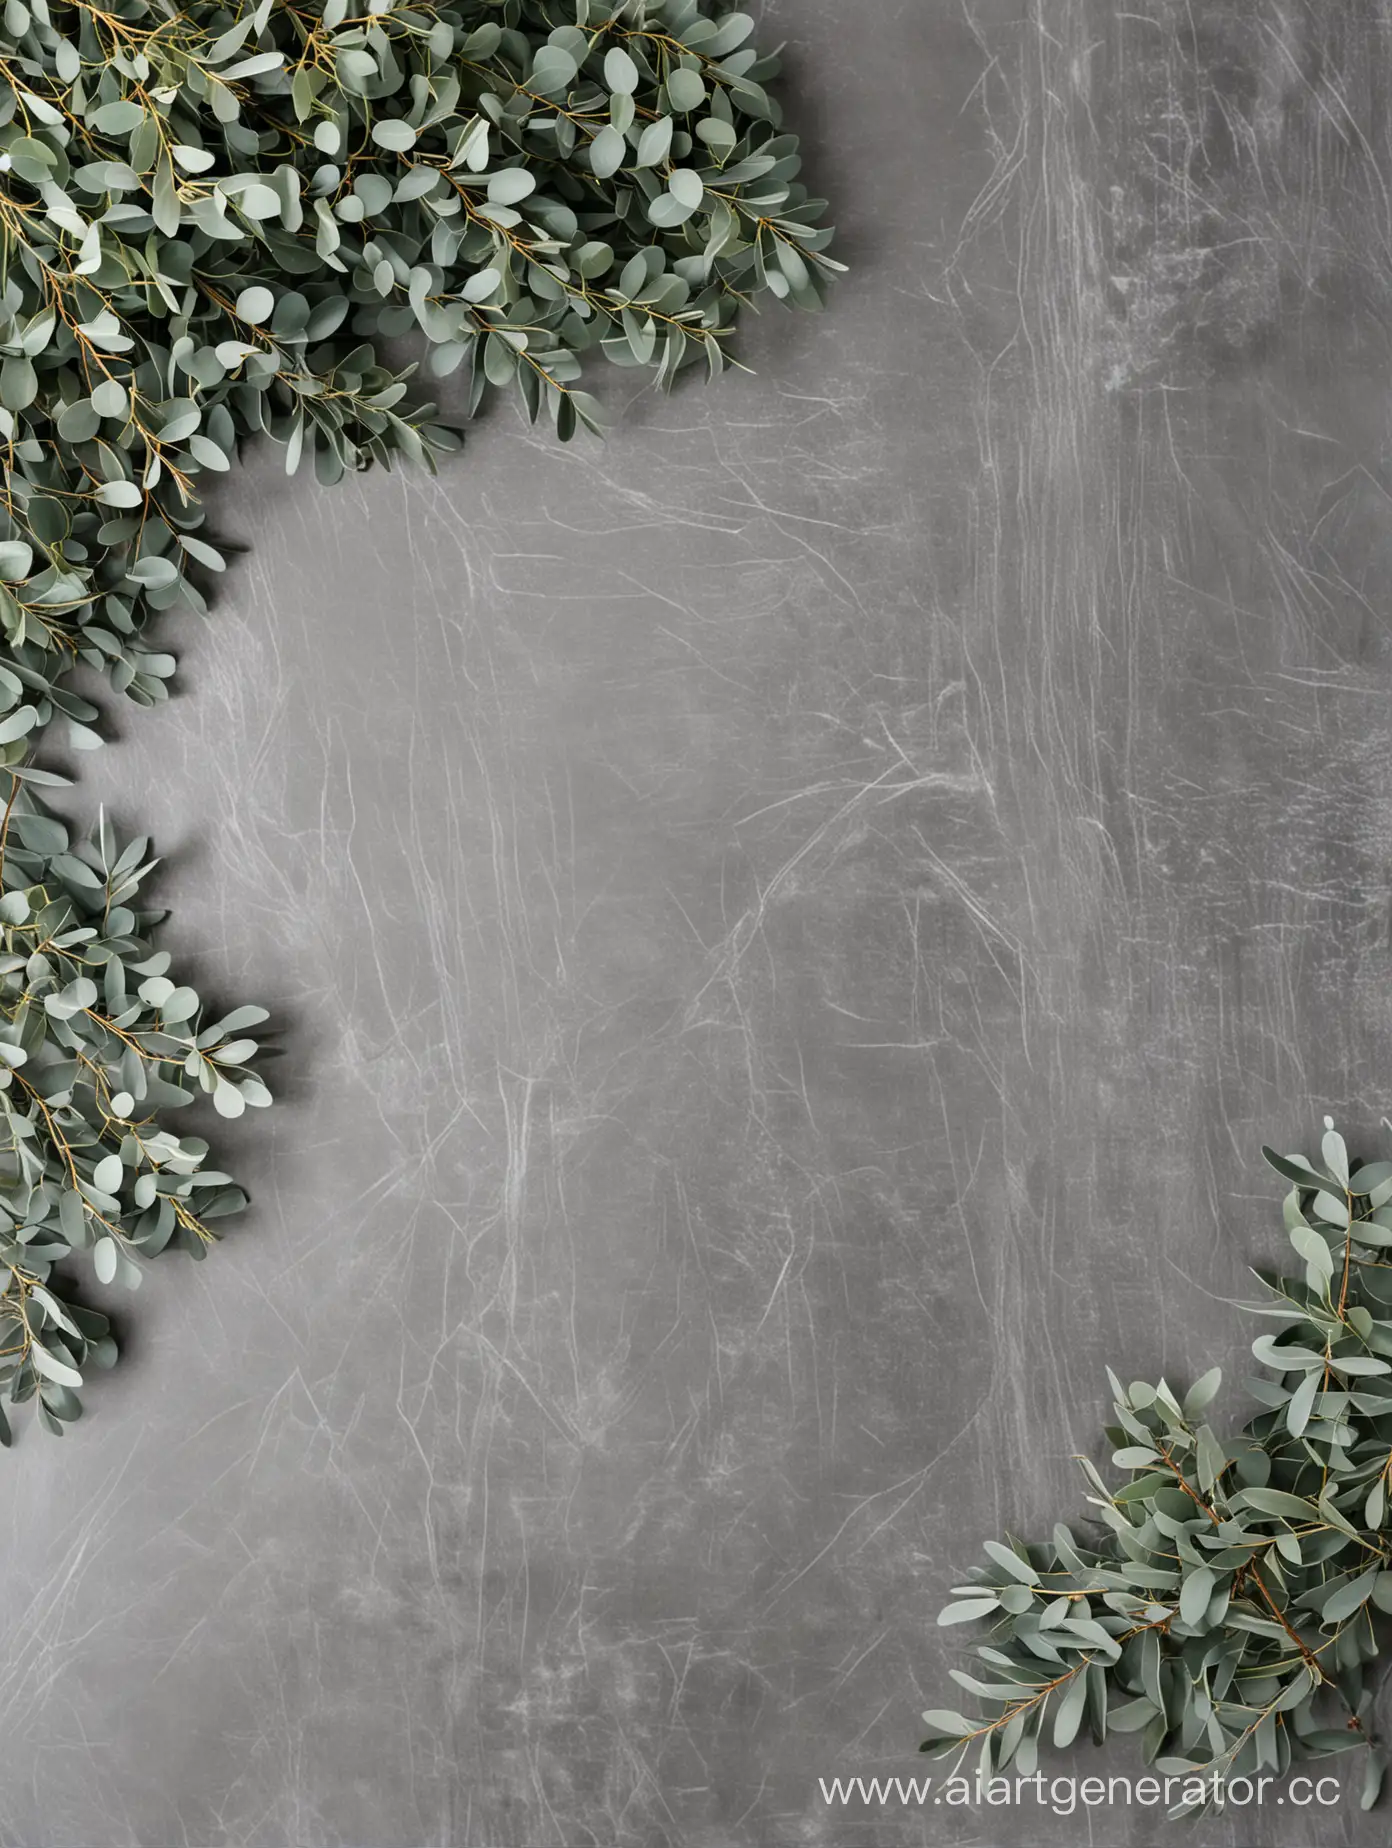 Elegant-Gray-Stone-Texture-Table-with-Eucalyptus-Sprigs-Decoration